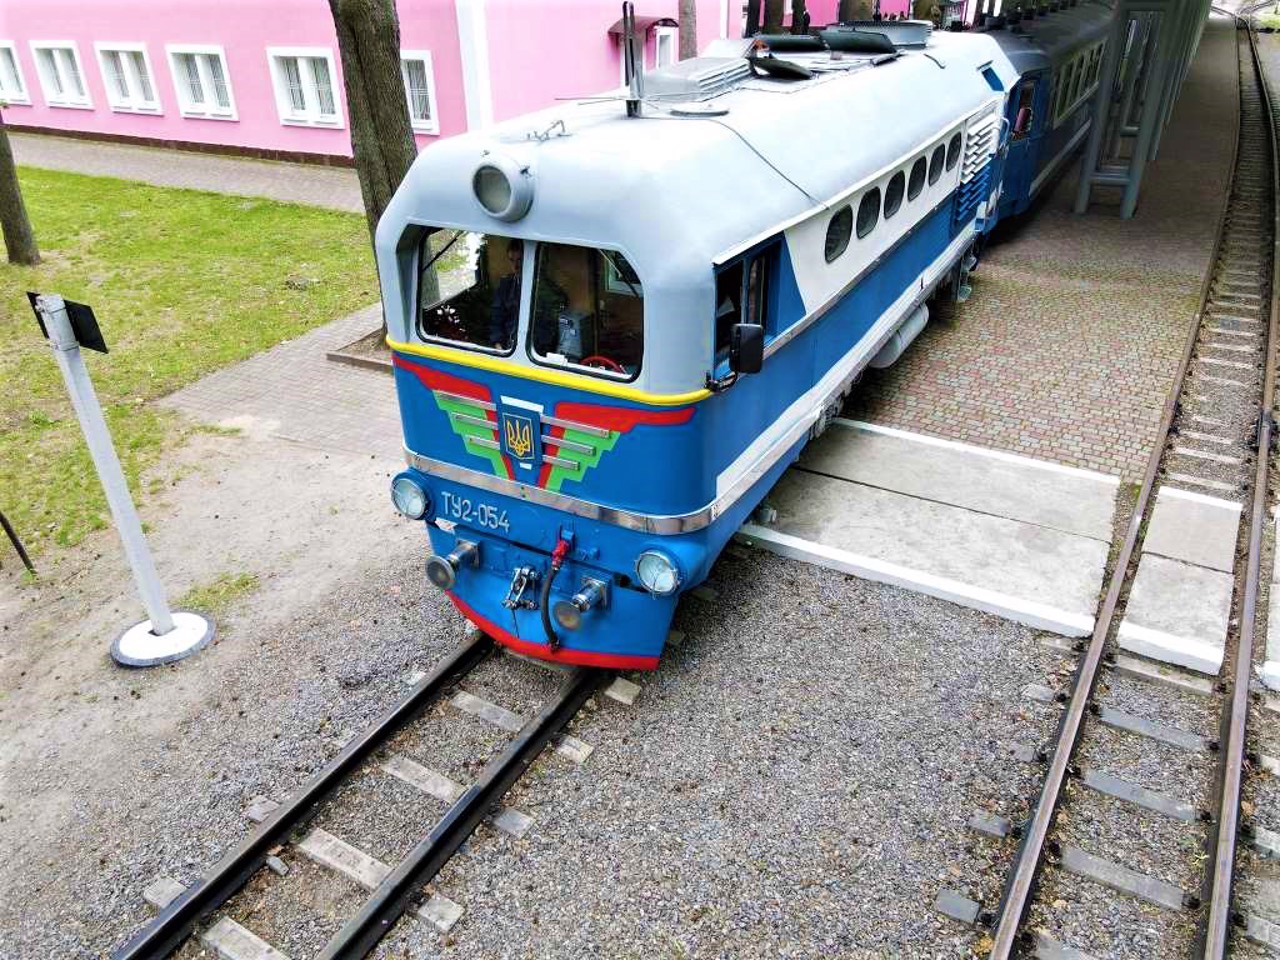 Children's Railway, Kharkiv